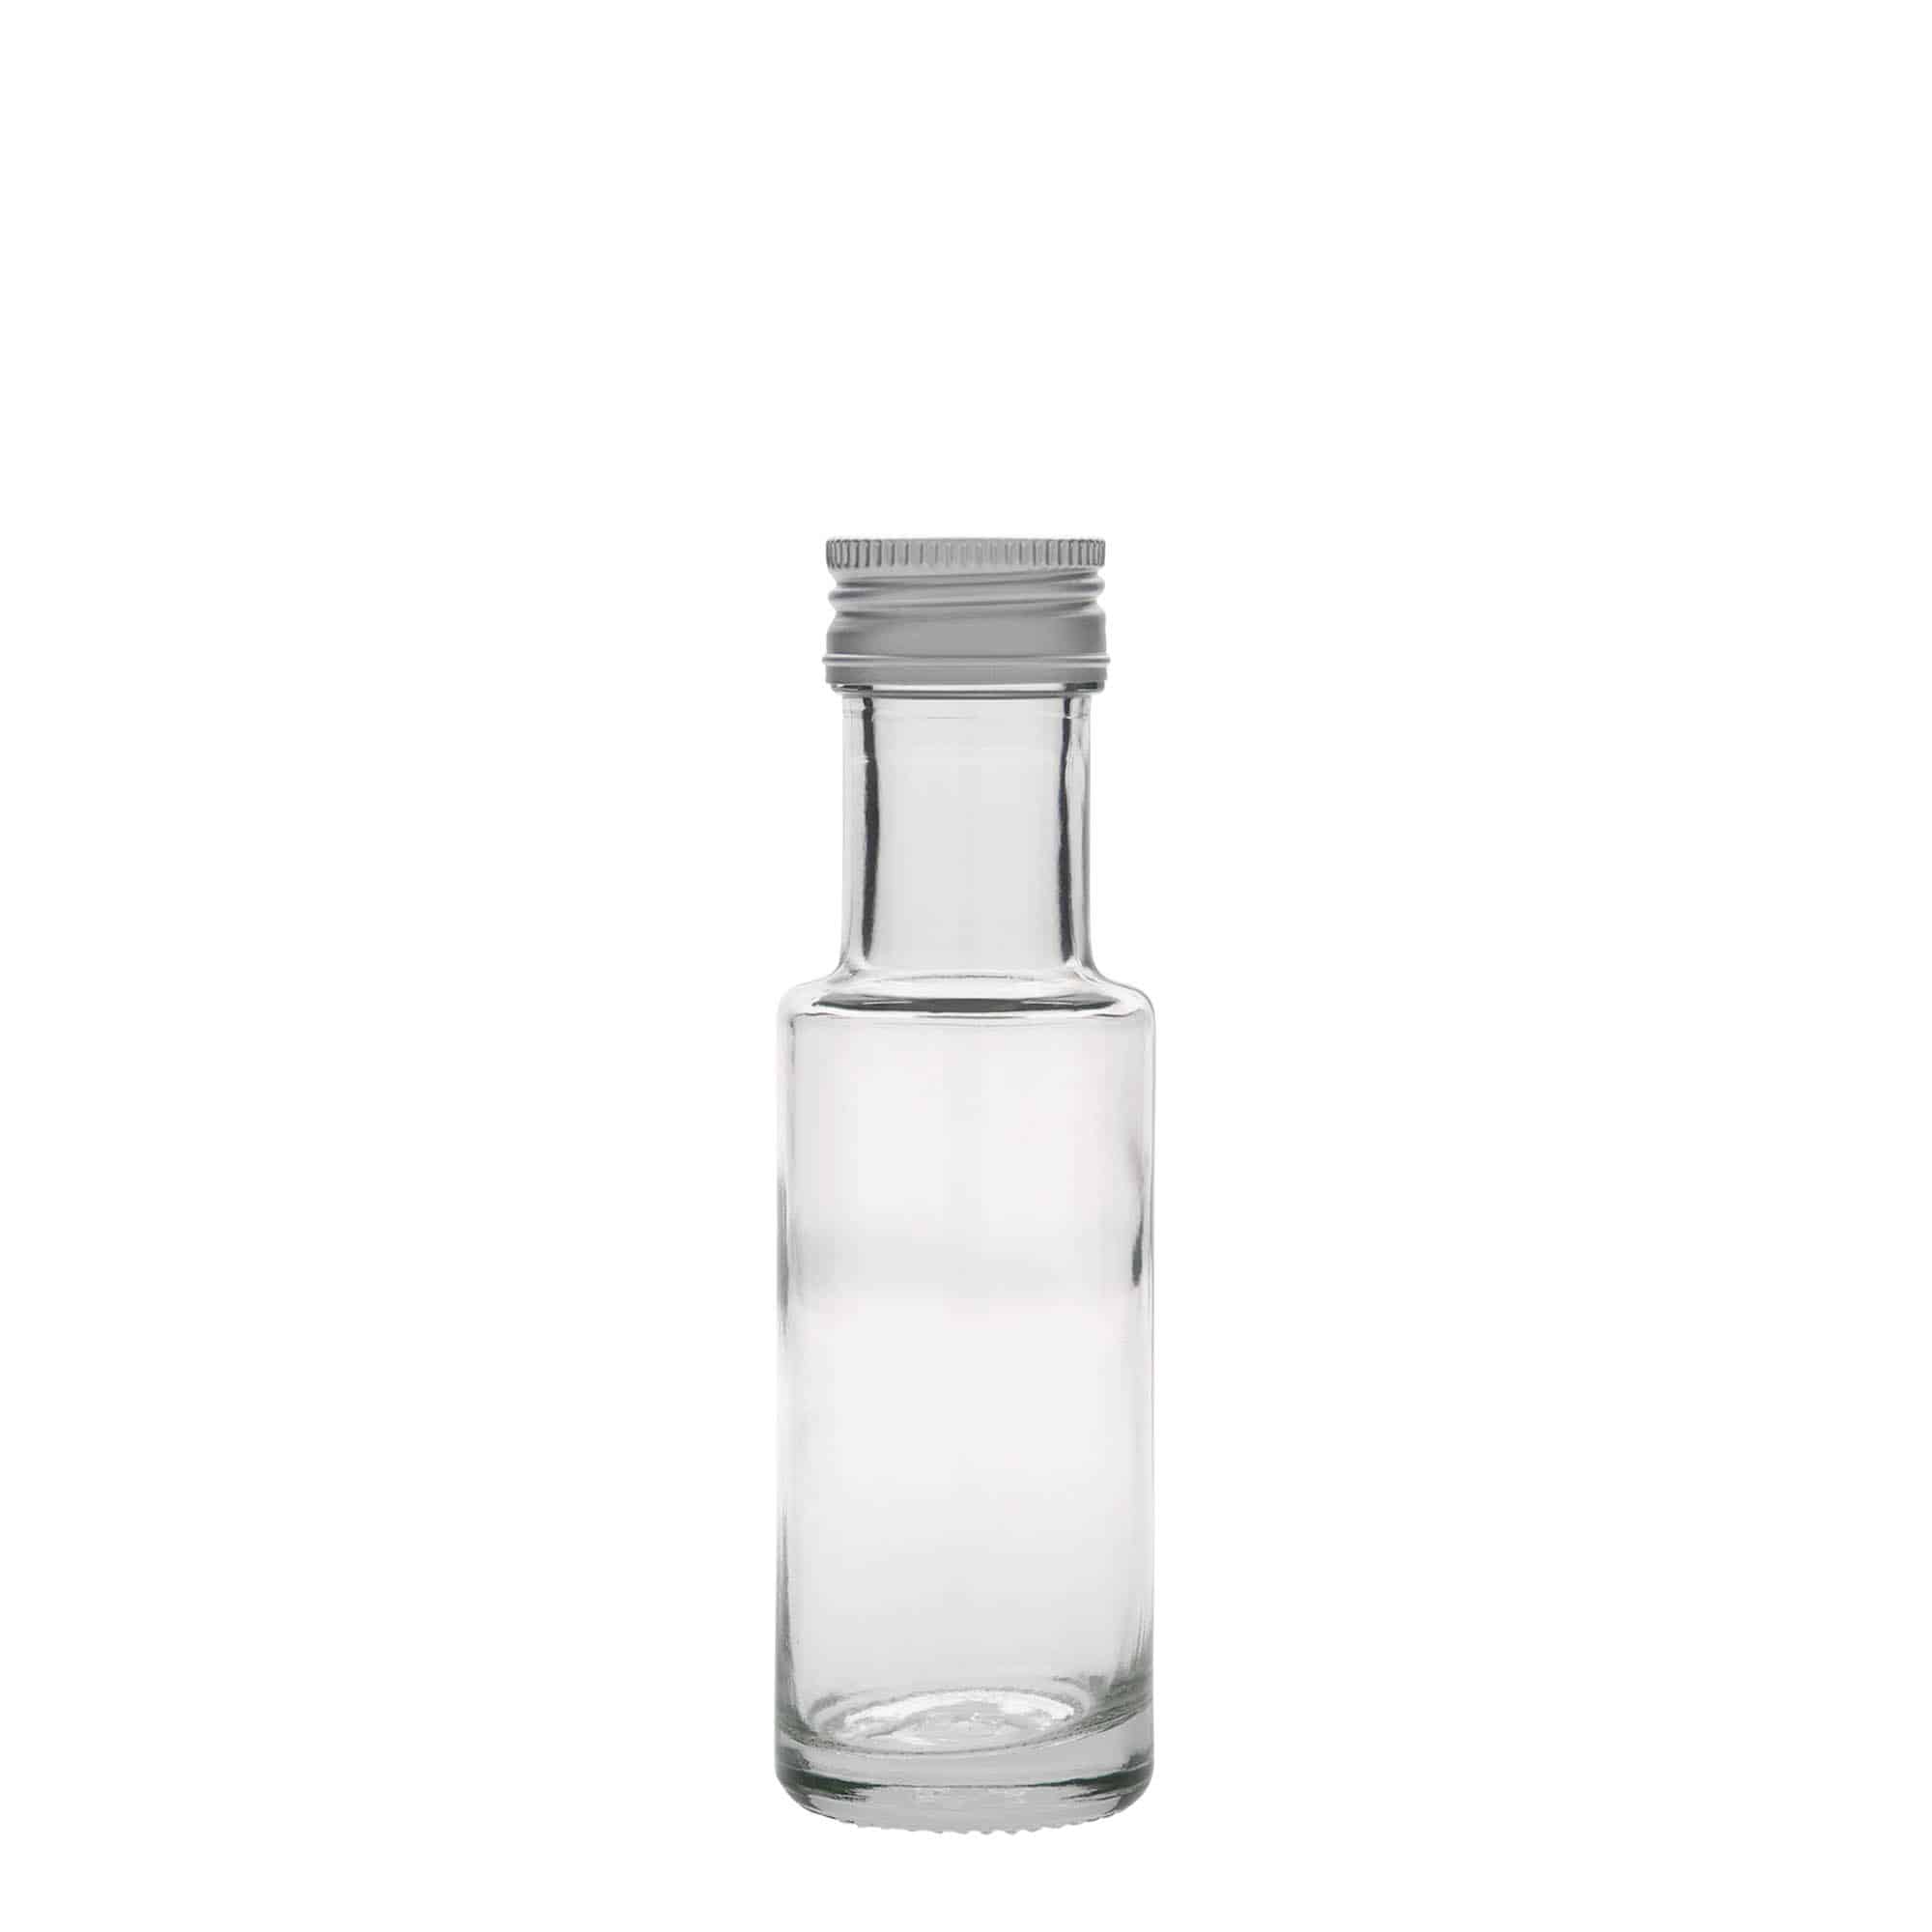 100 ml glass bottle 'Dorica', closure: PP 31.5